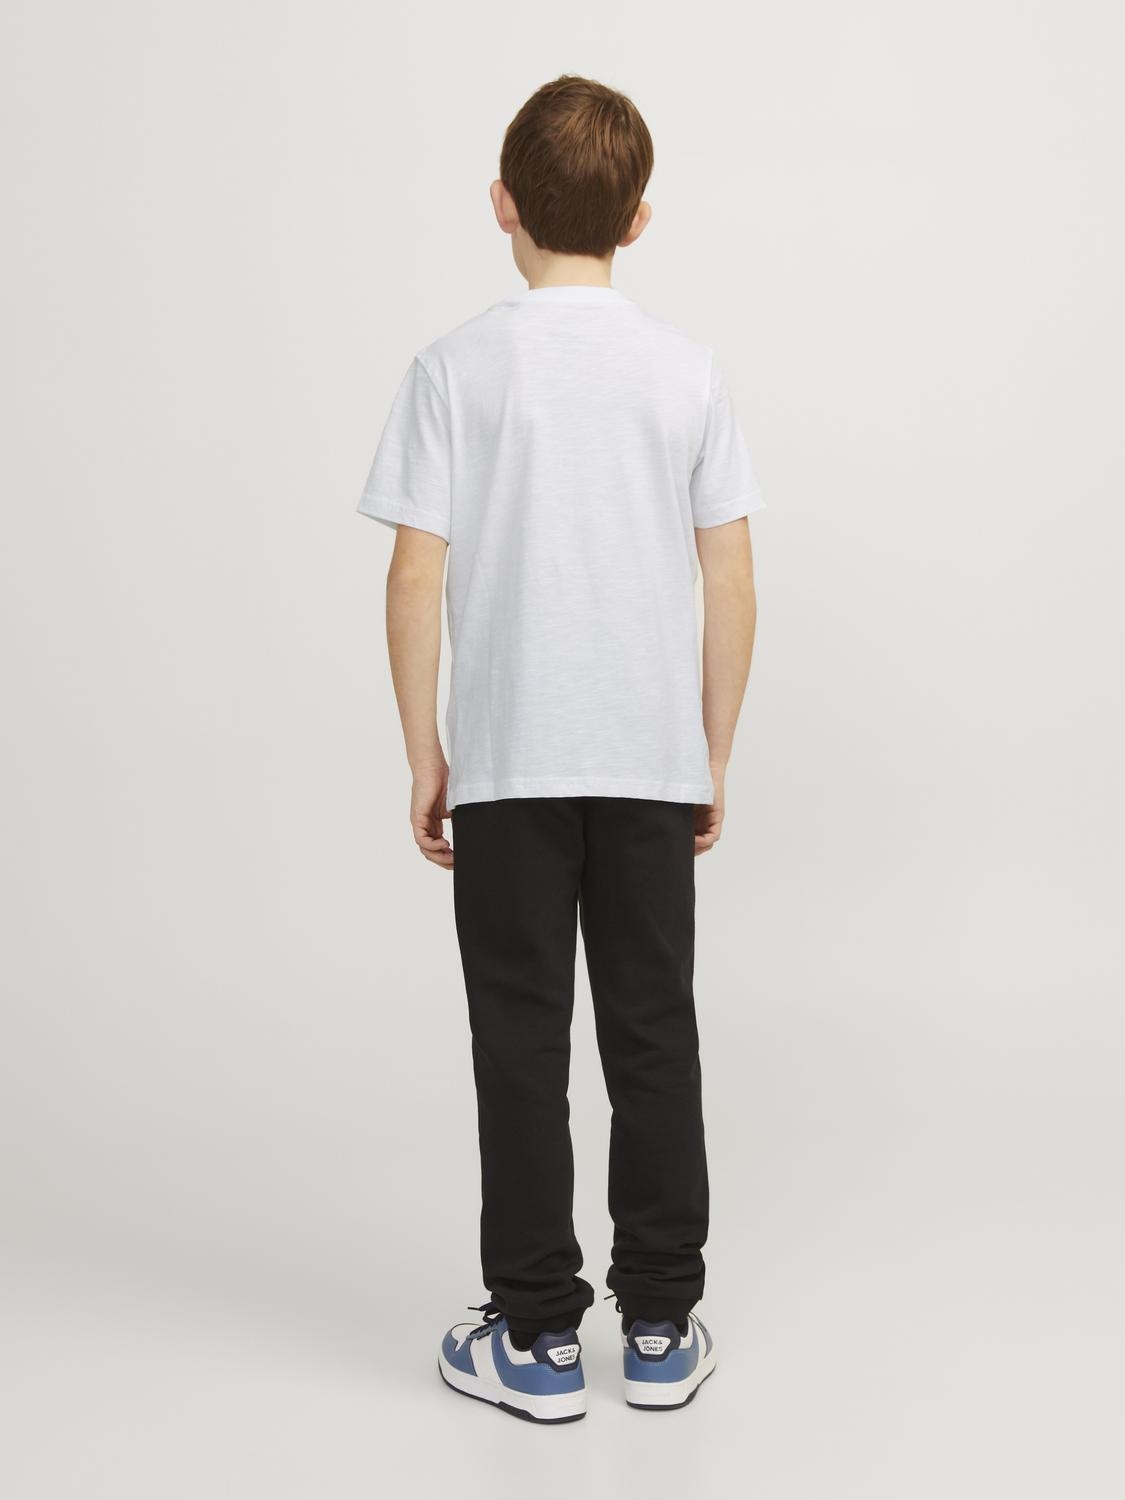 Jack & Jones Printed T-shirt Mini -Bright White - 12257435